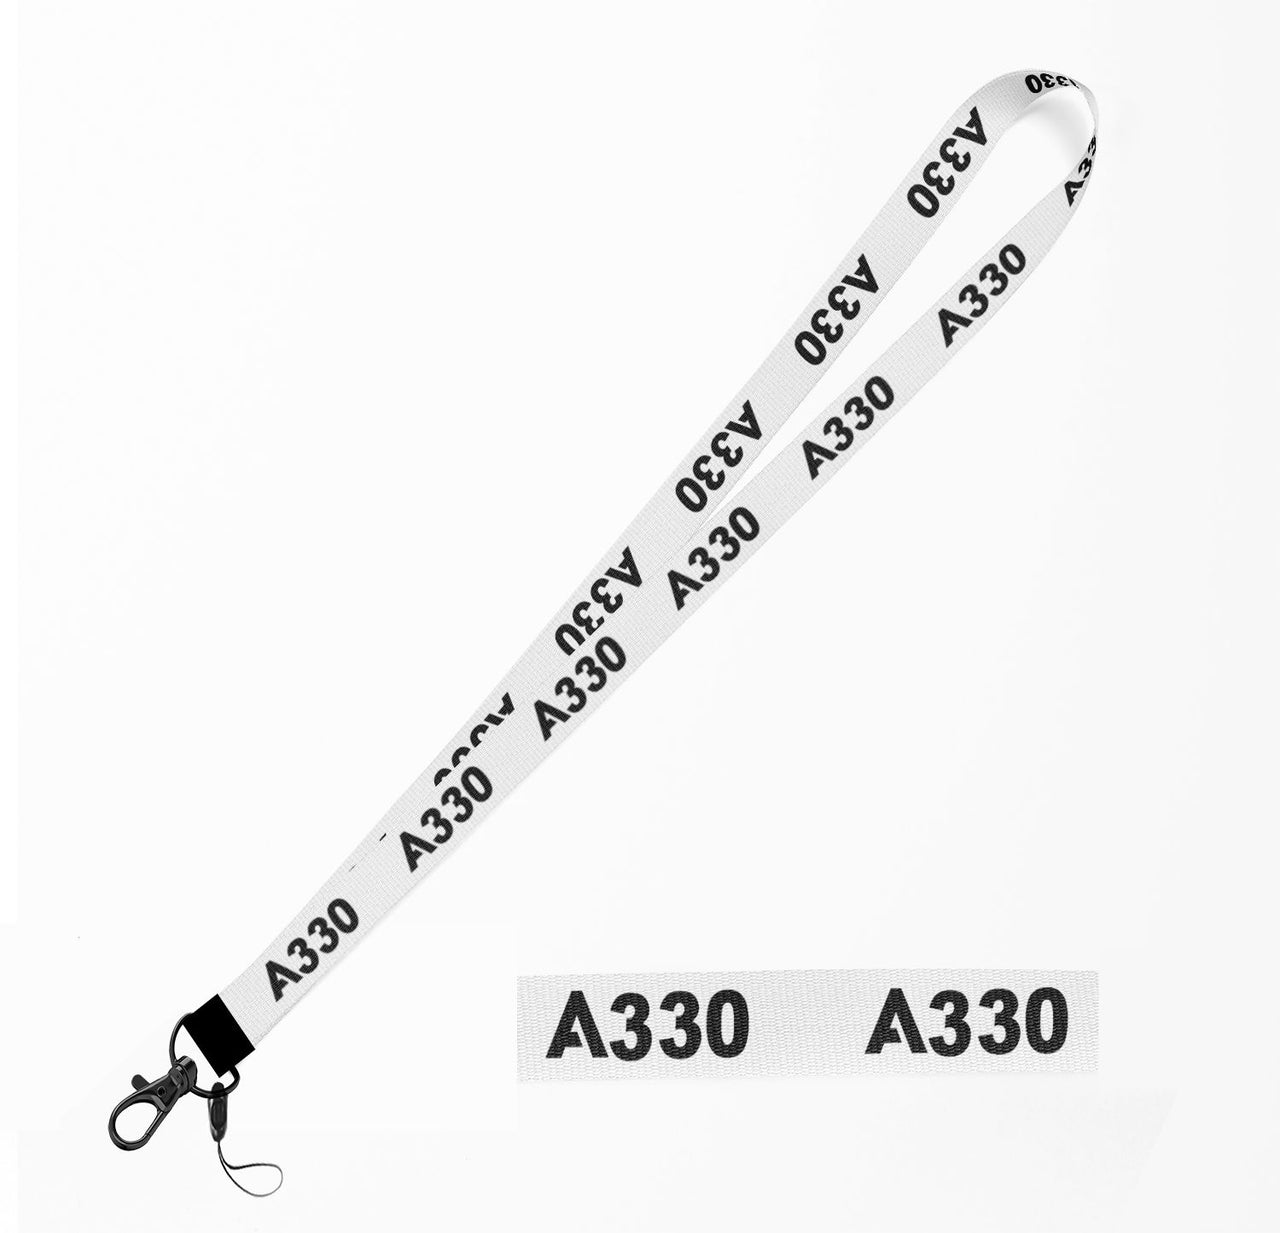 A330 Flat Text Designed Lanyard & ID Holders